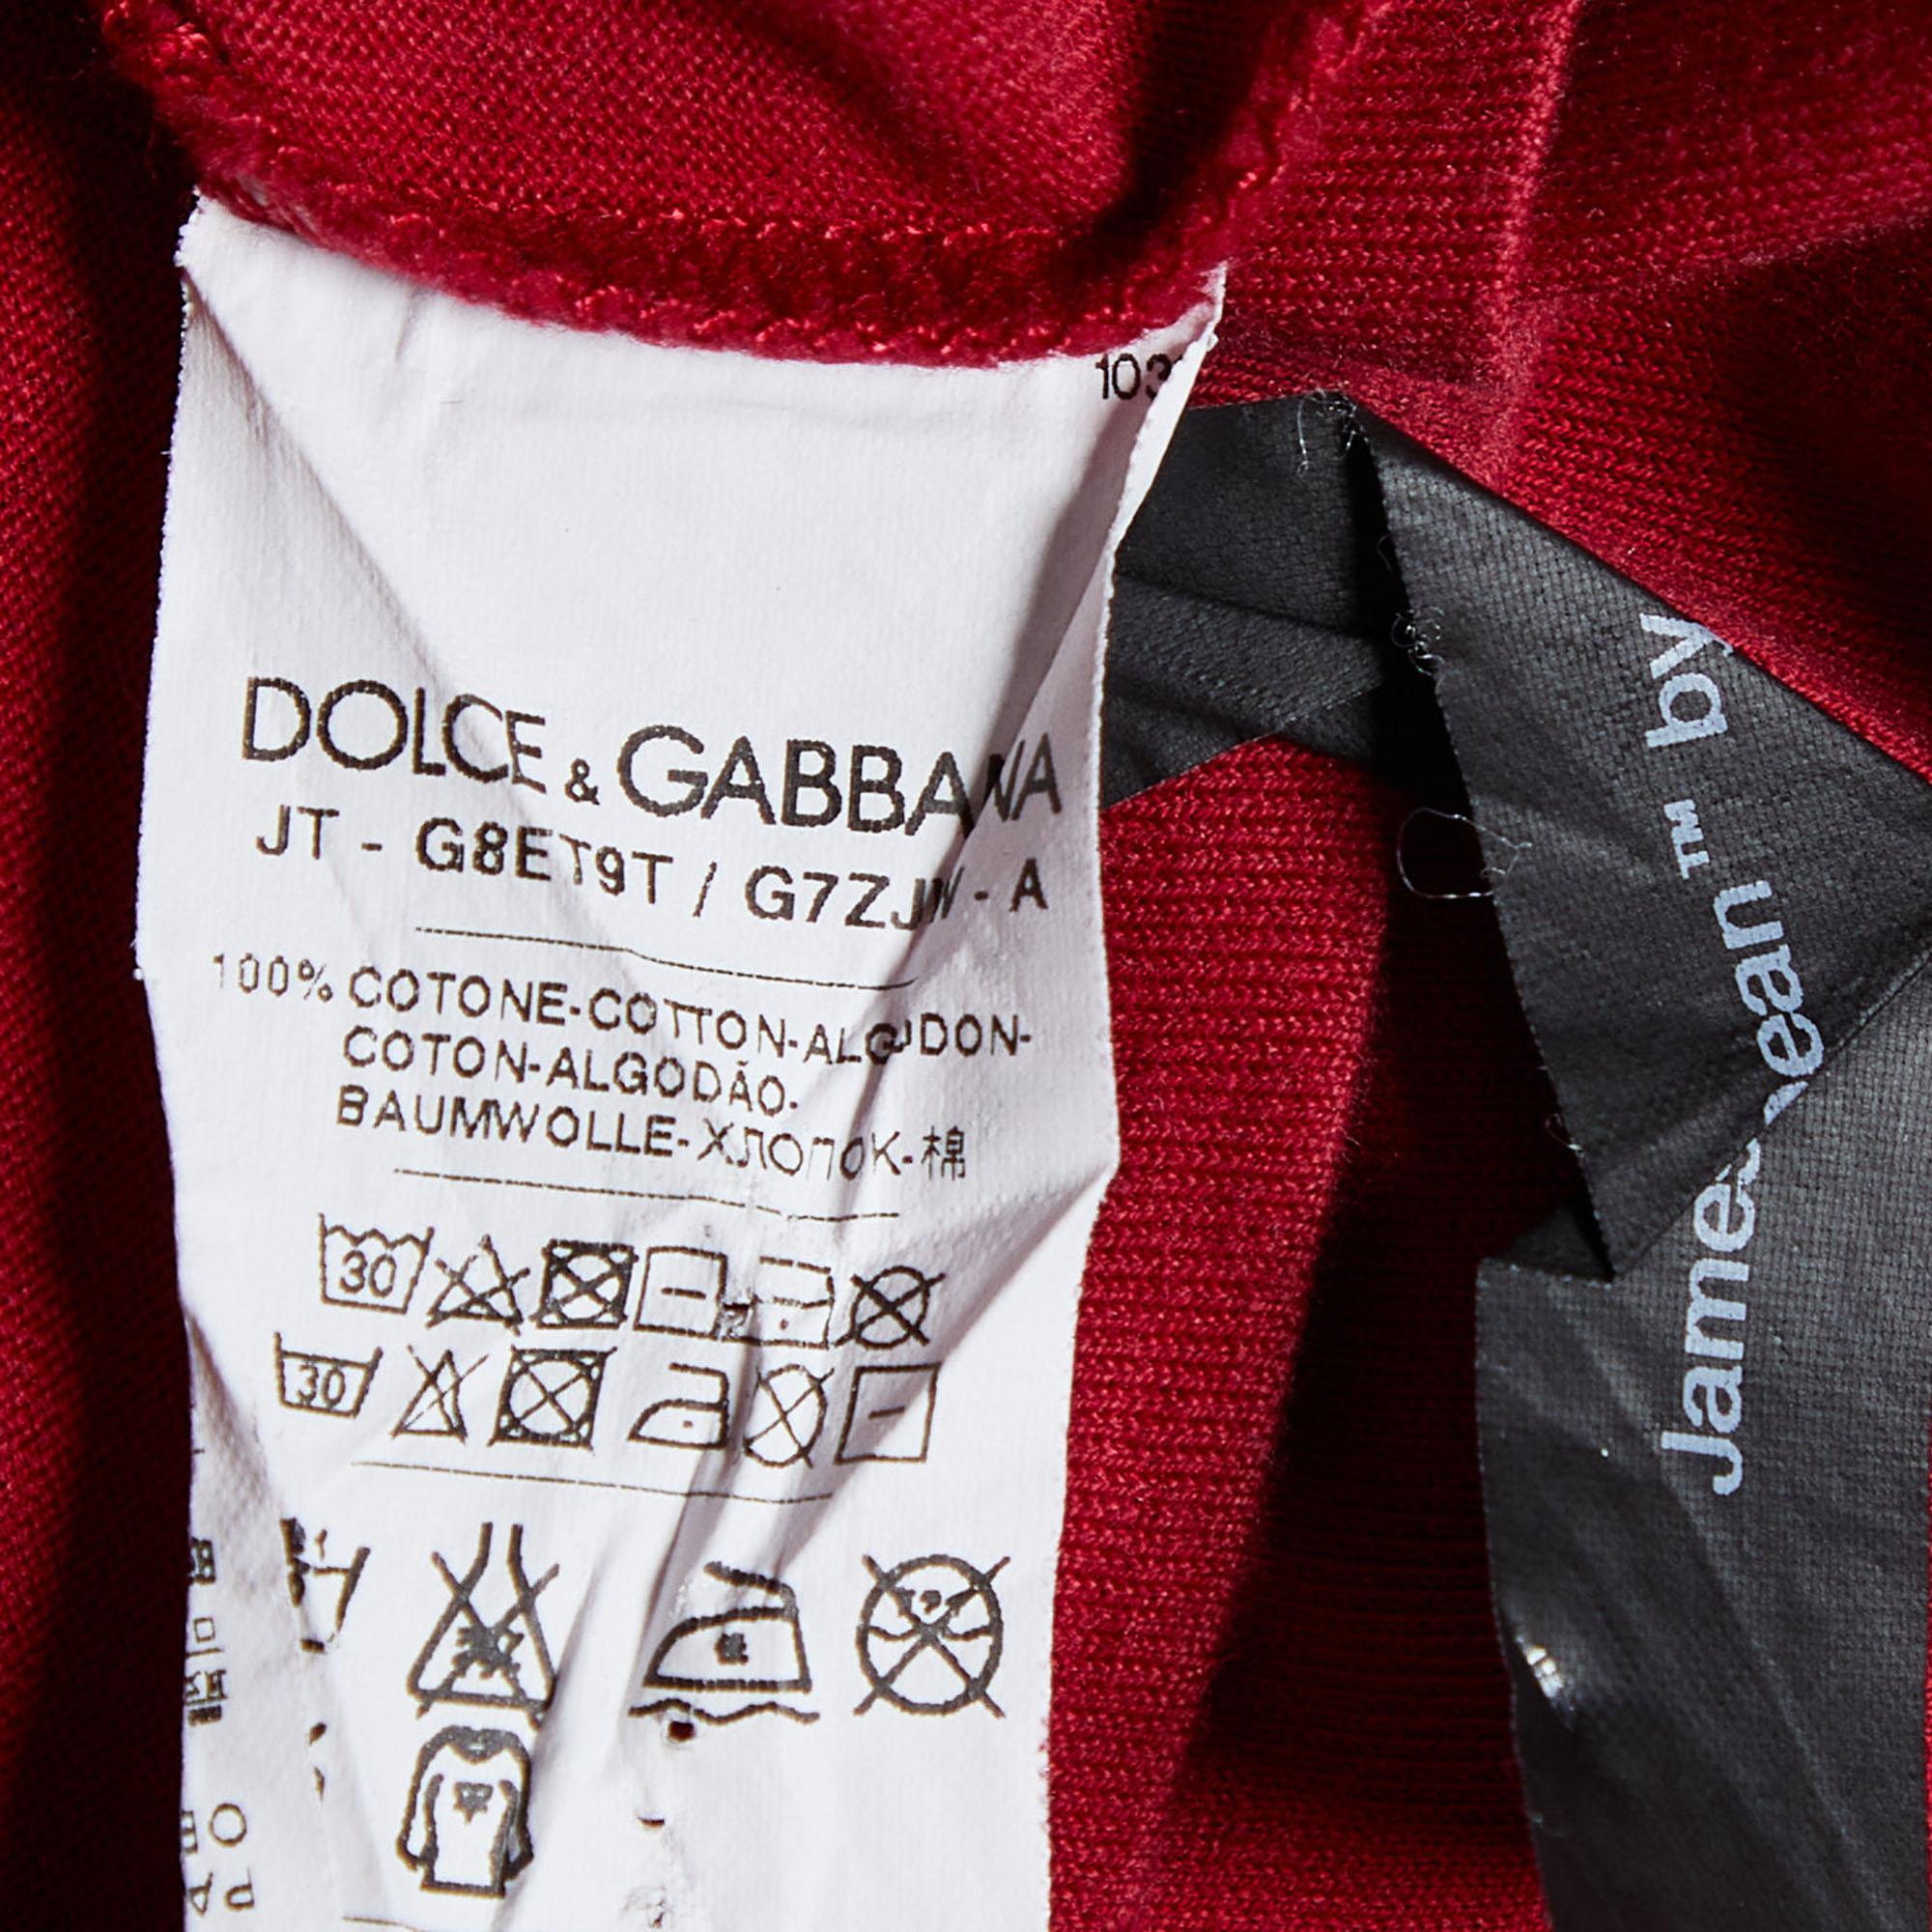 Dolce & Gabbana Red Printed Cotton Knit T-Shirt XXL